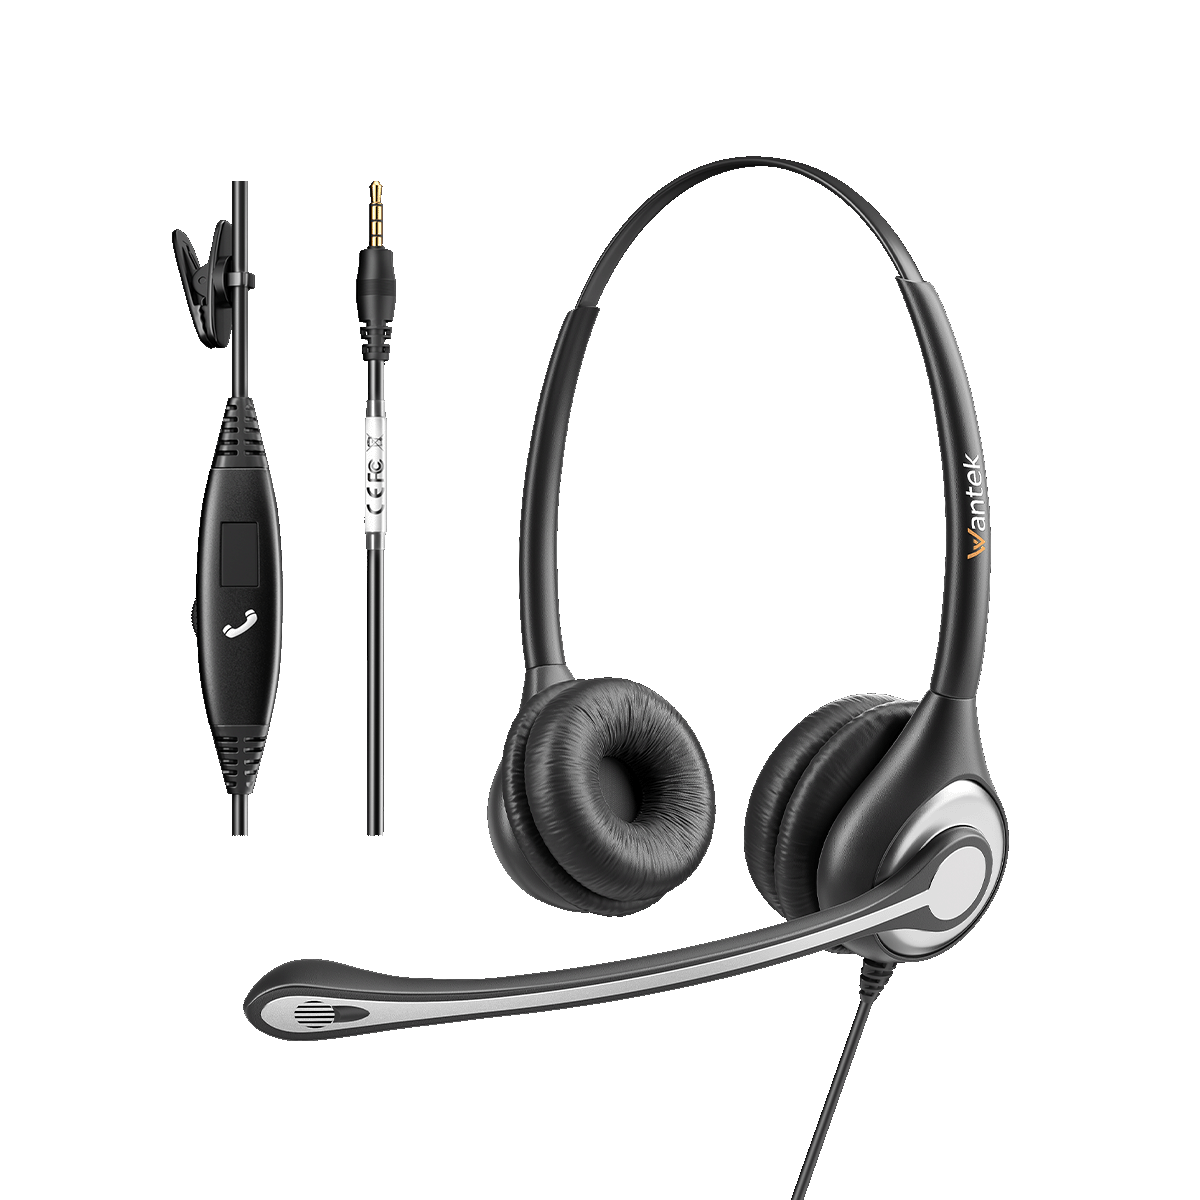 Wantek headset 3.5mm jack H602